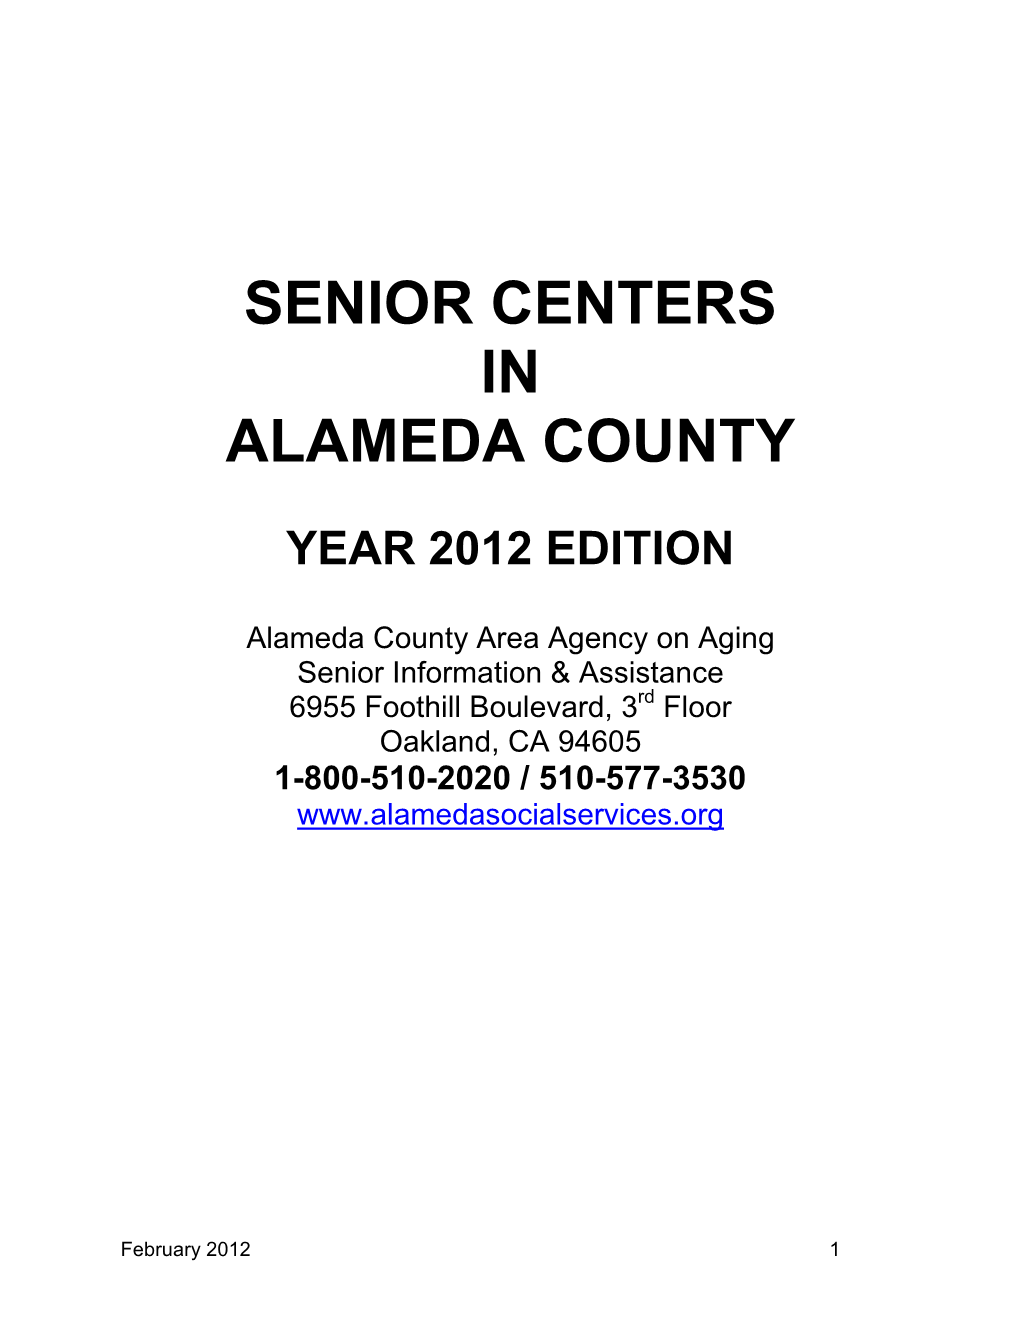 Senior Centers in Alameda County